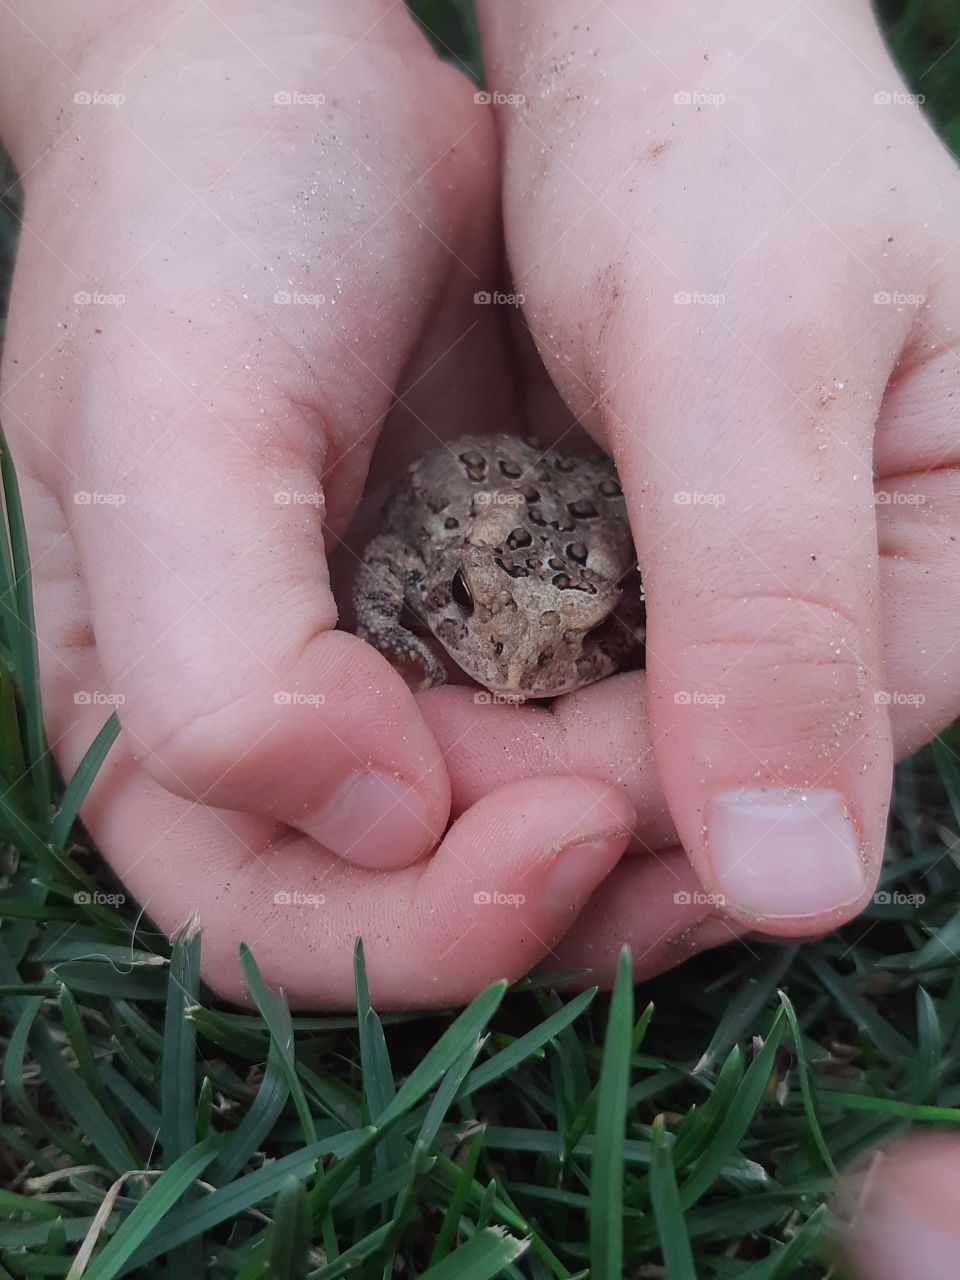 Toad in hands